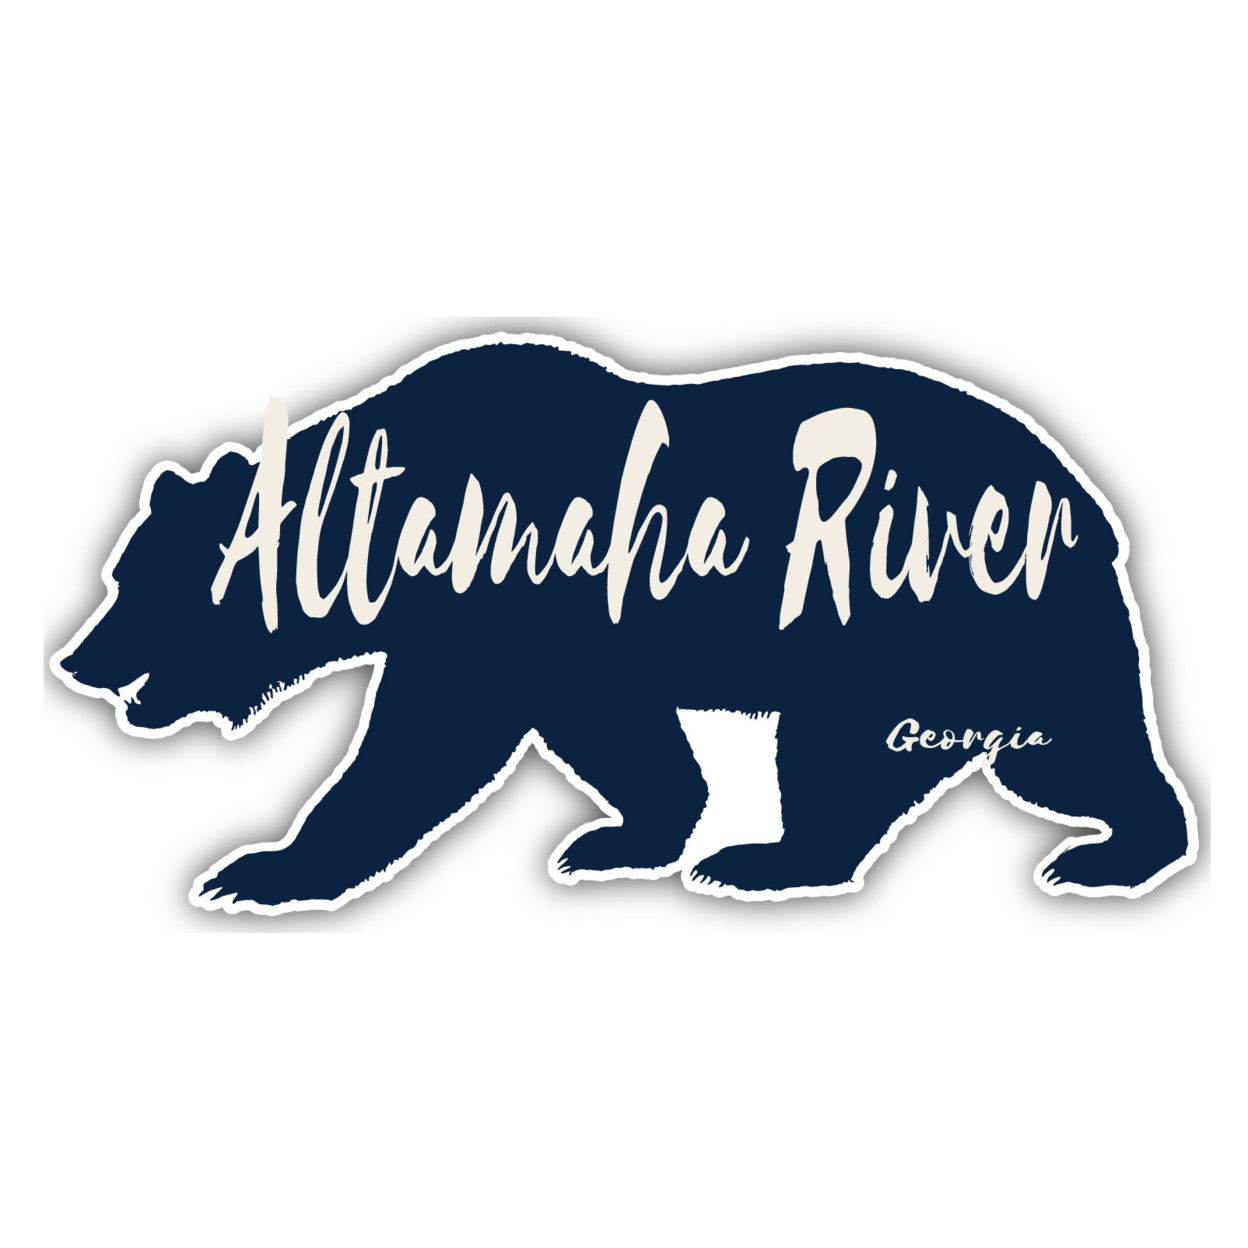 Altamaha River Georgia Souvenir Decorative Stickers (Choose Theme And Size) - 4-Pack, 8-Inch, Bear